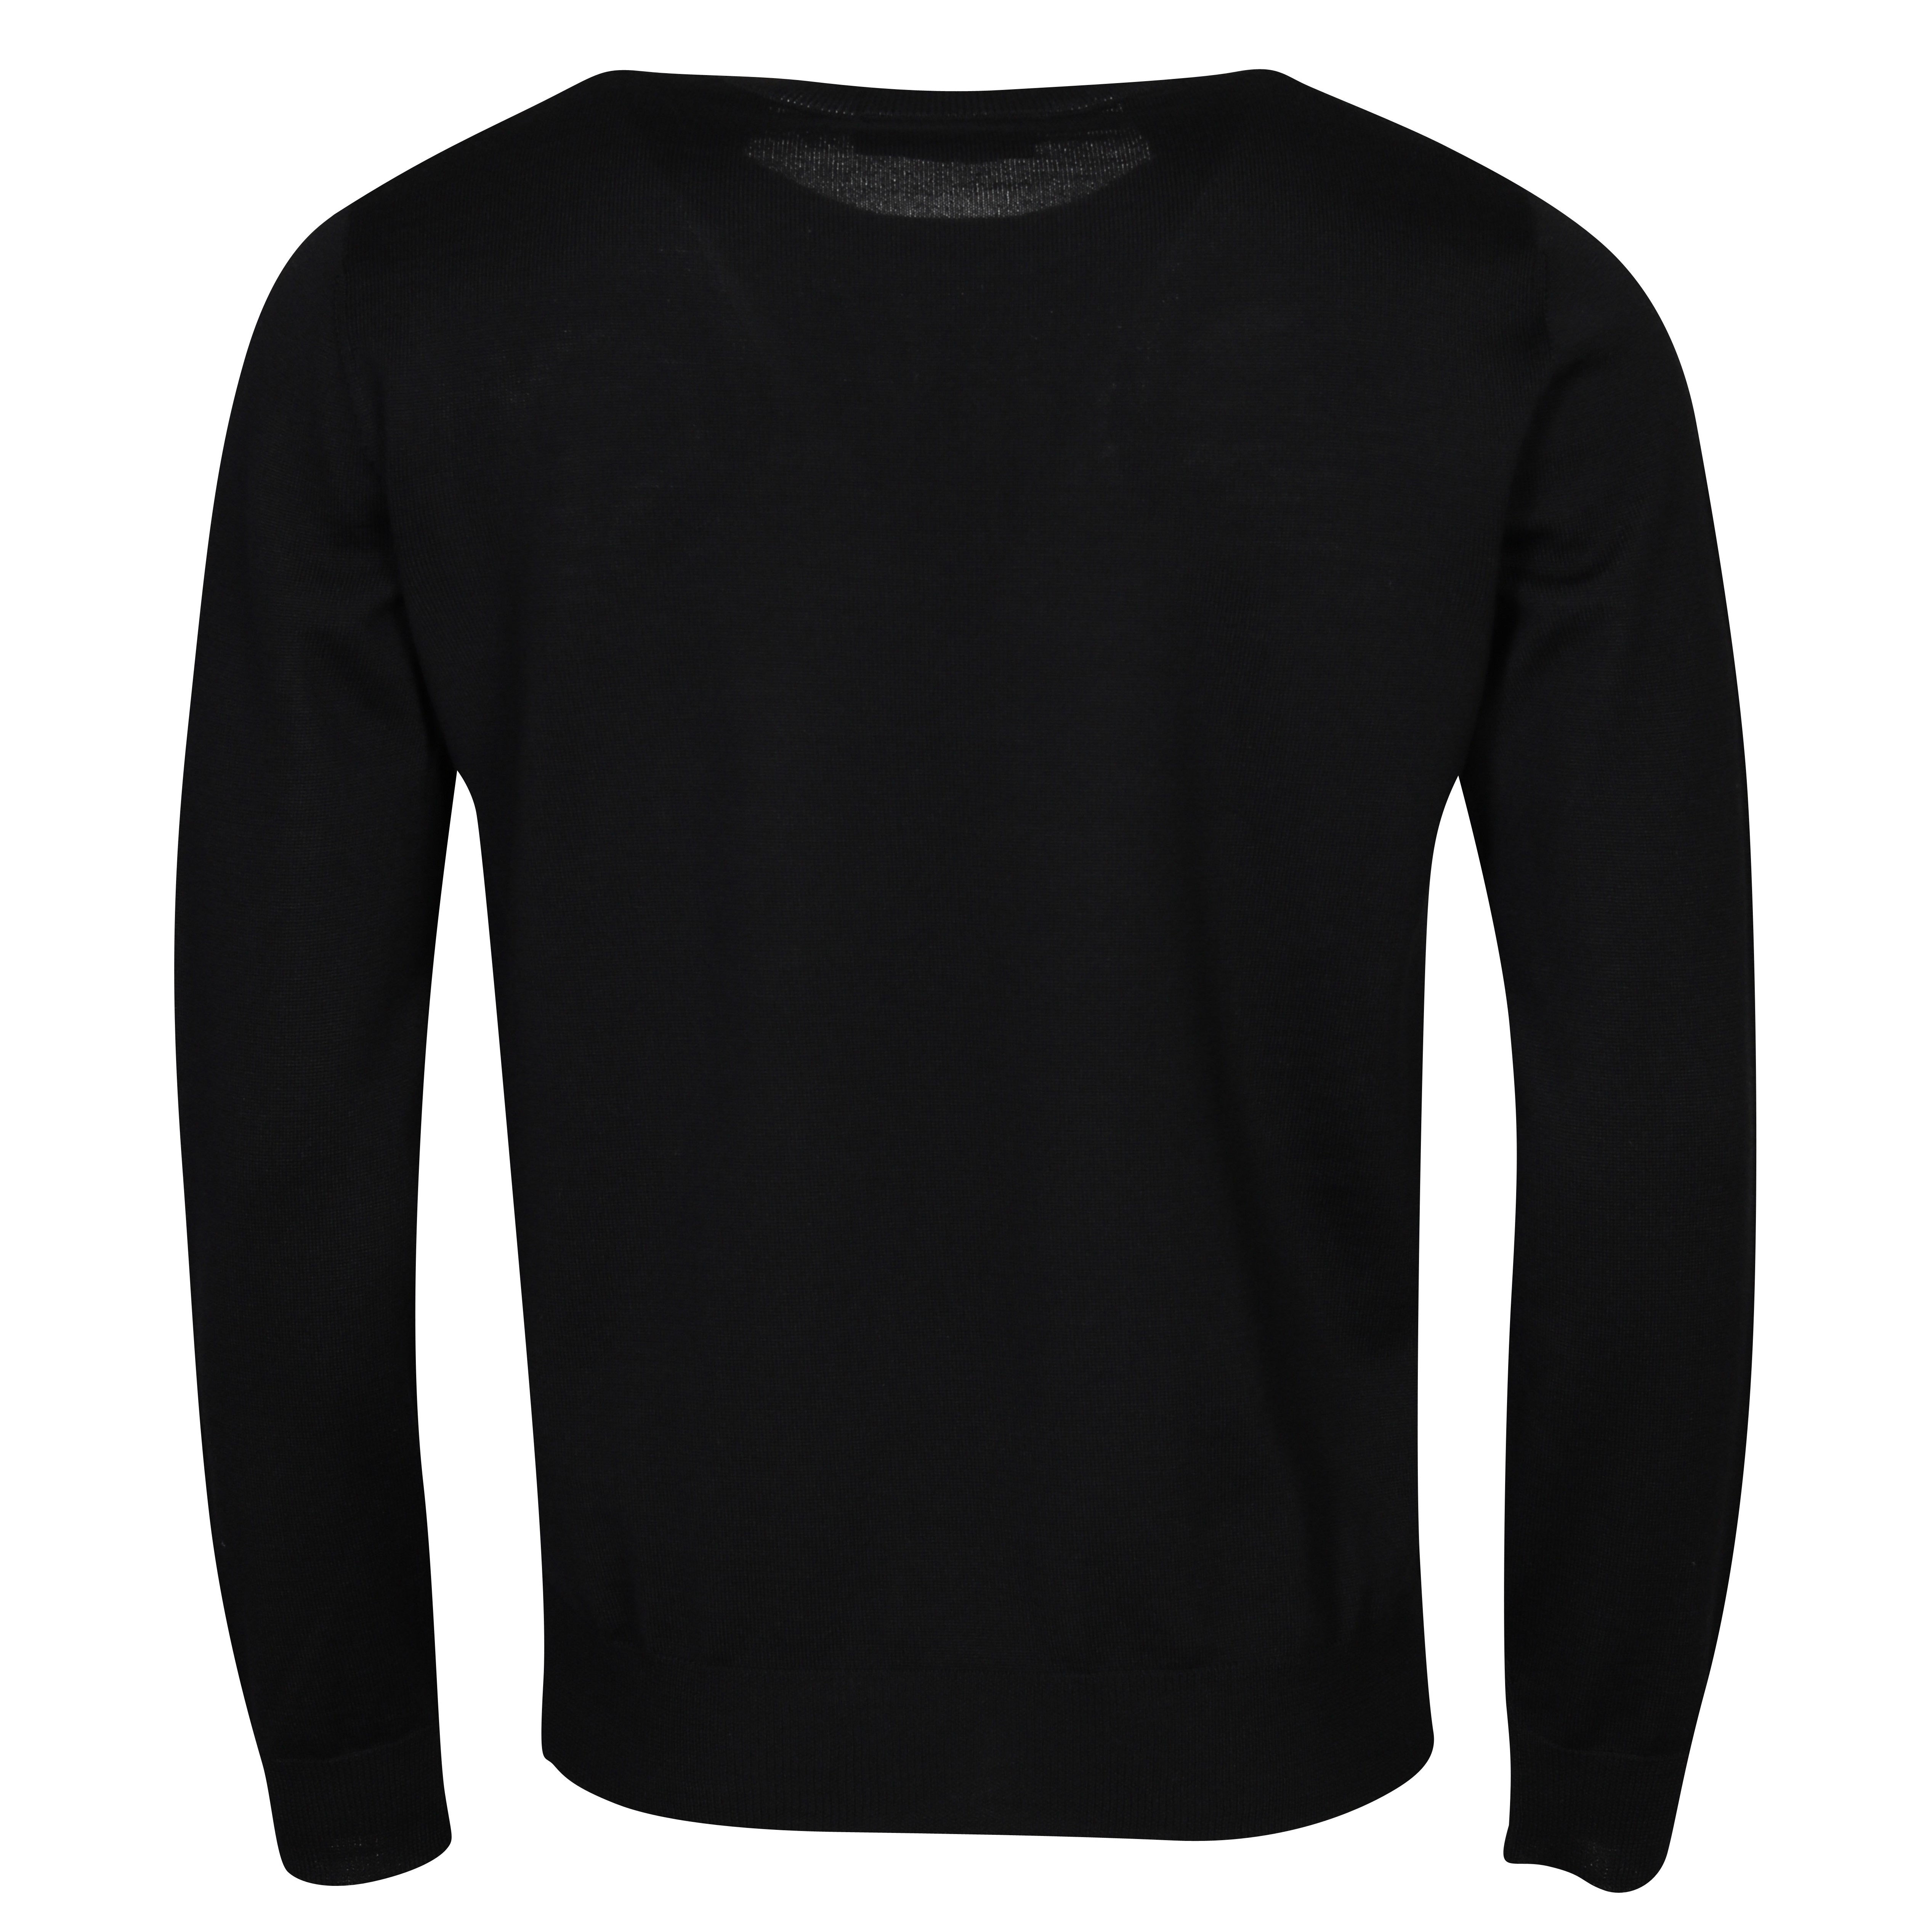 Dsquared Ceresio 9 Knit Sweater in Black